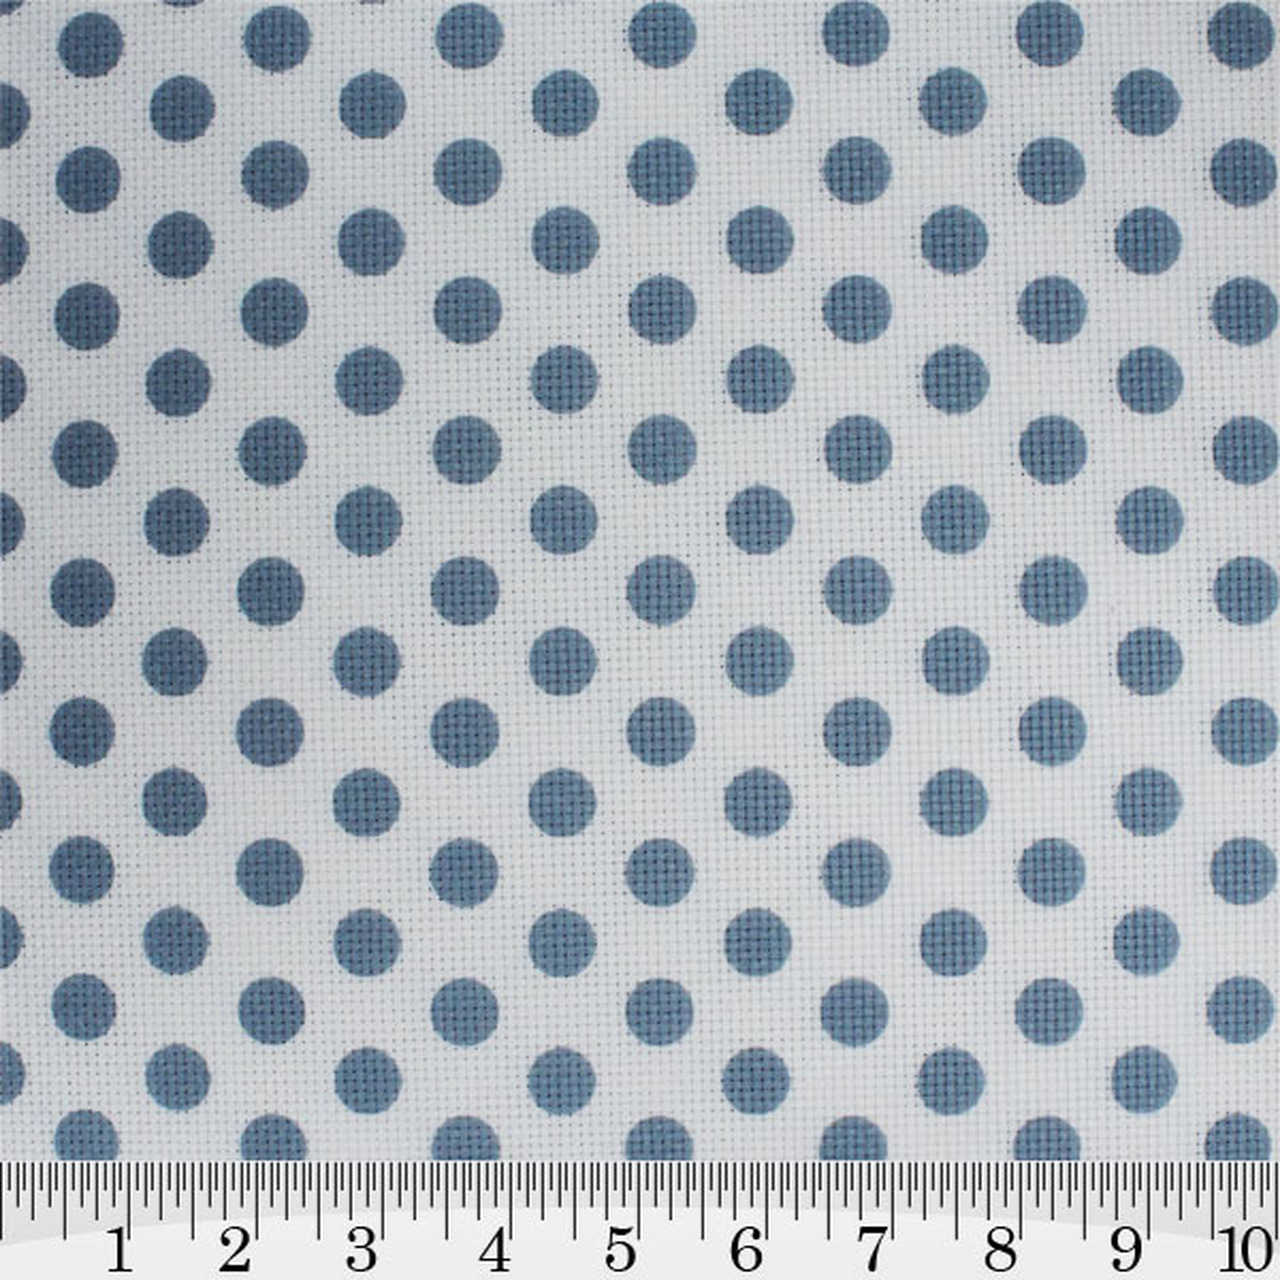 Blue Polka Dots Patterned Cross Stitch Fabric